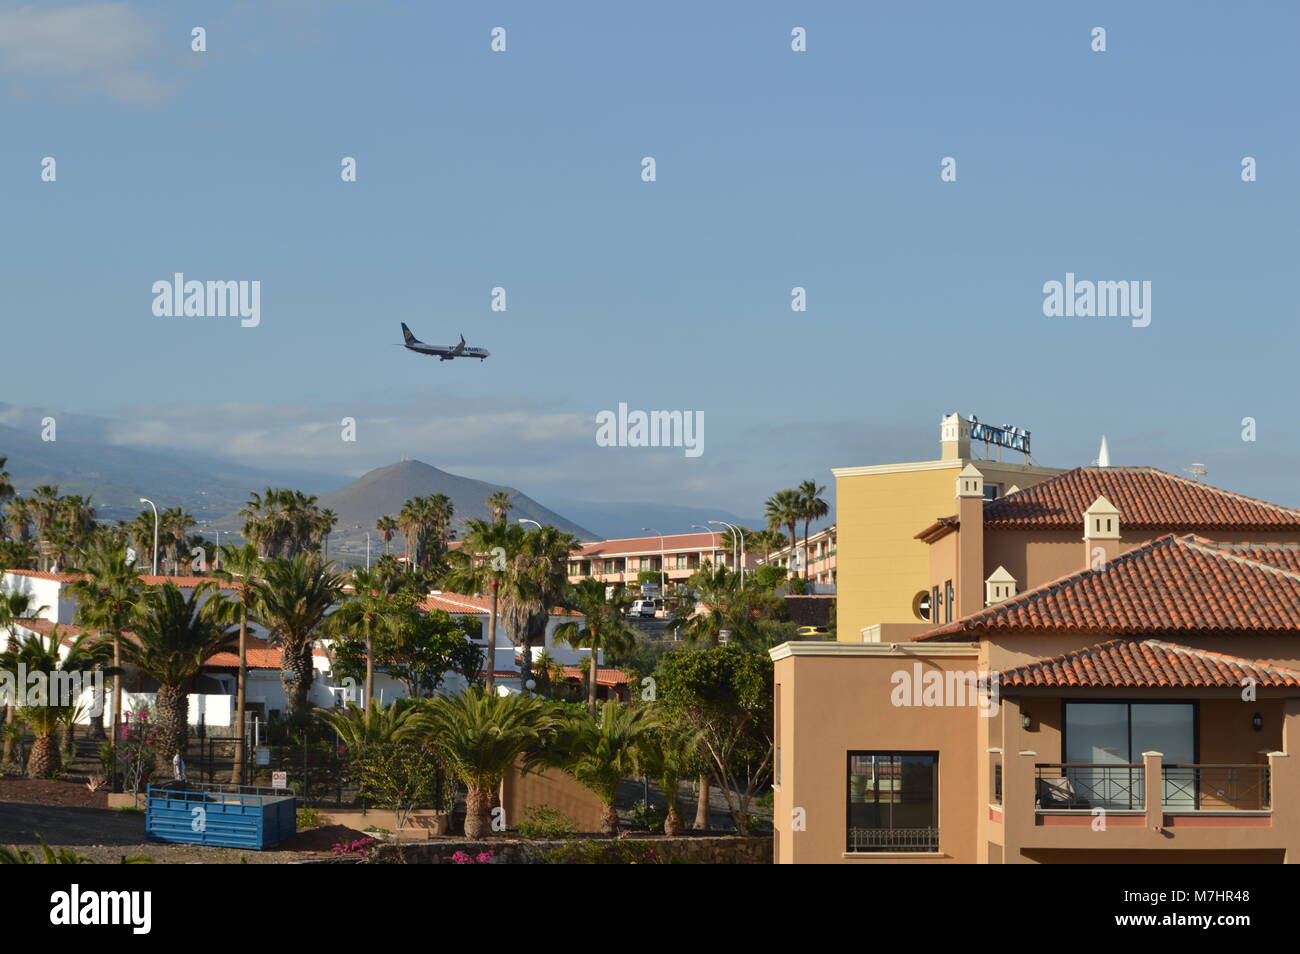 Landing plane above town in Tenerife Stock Photo